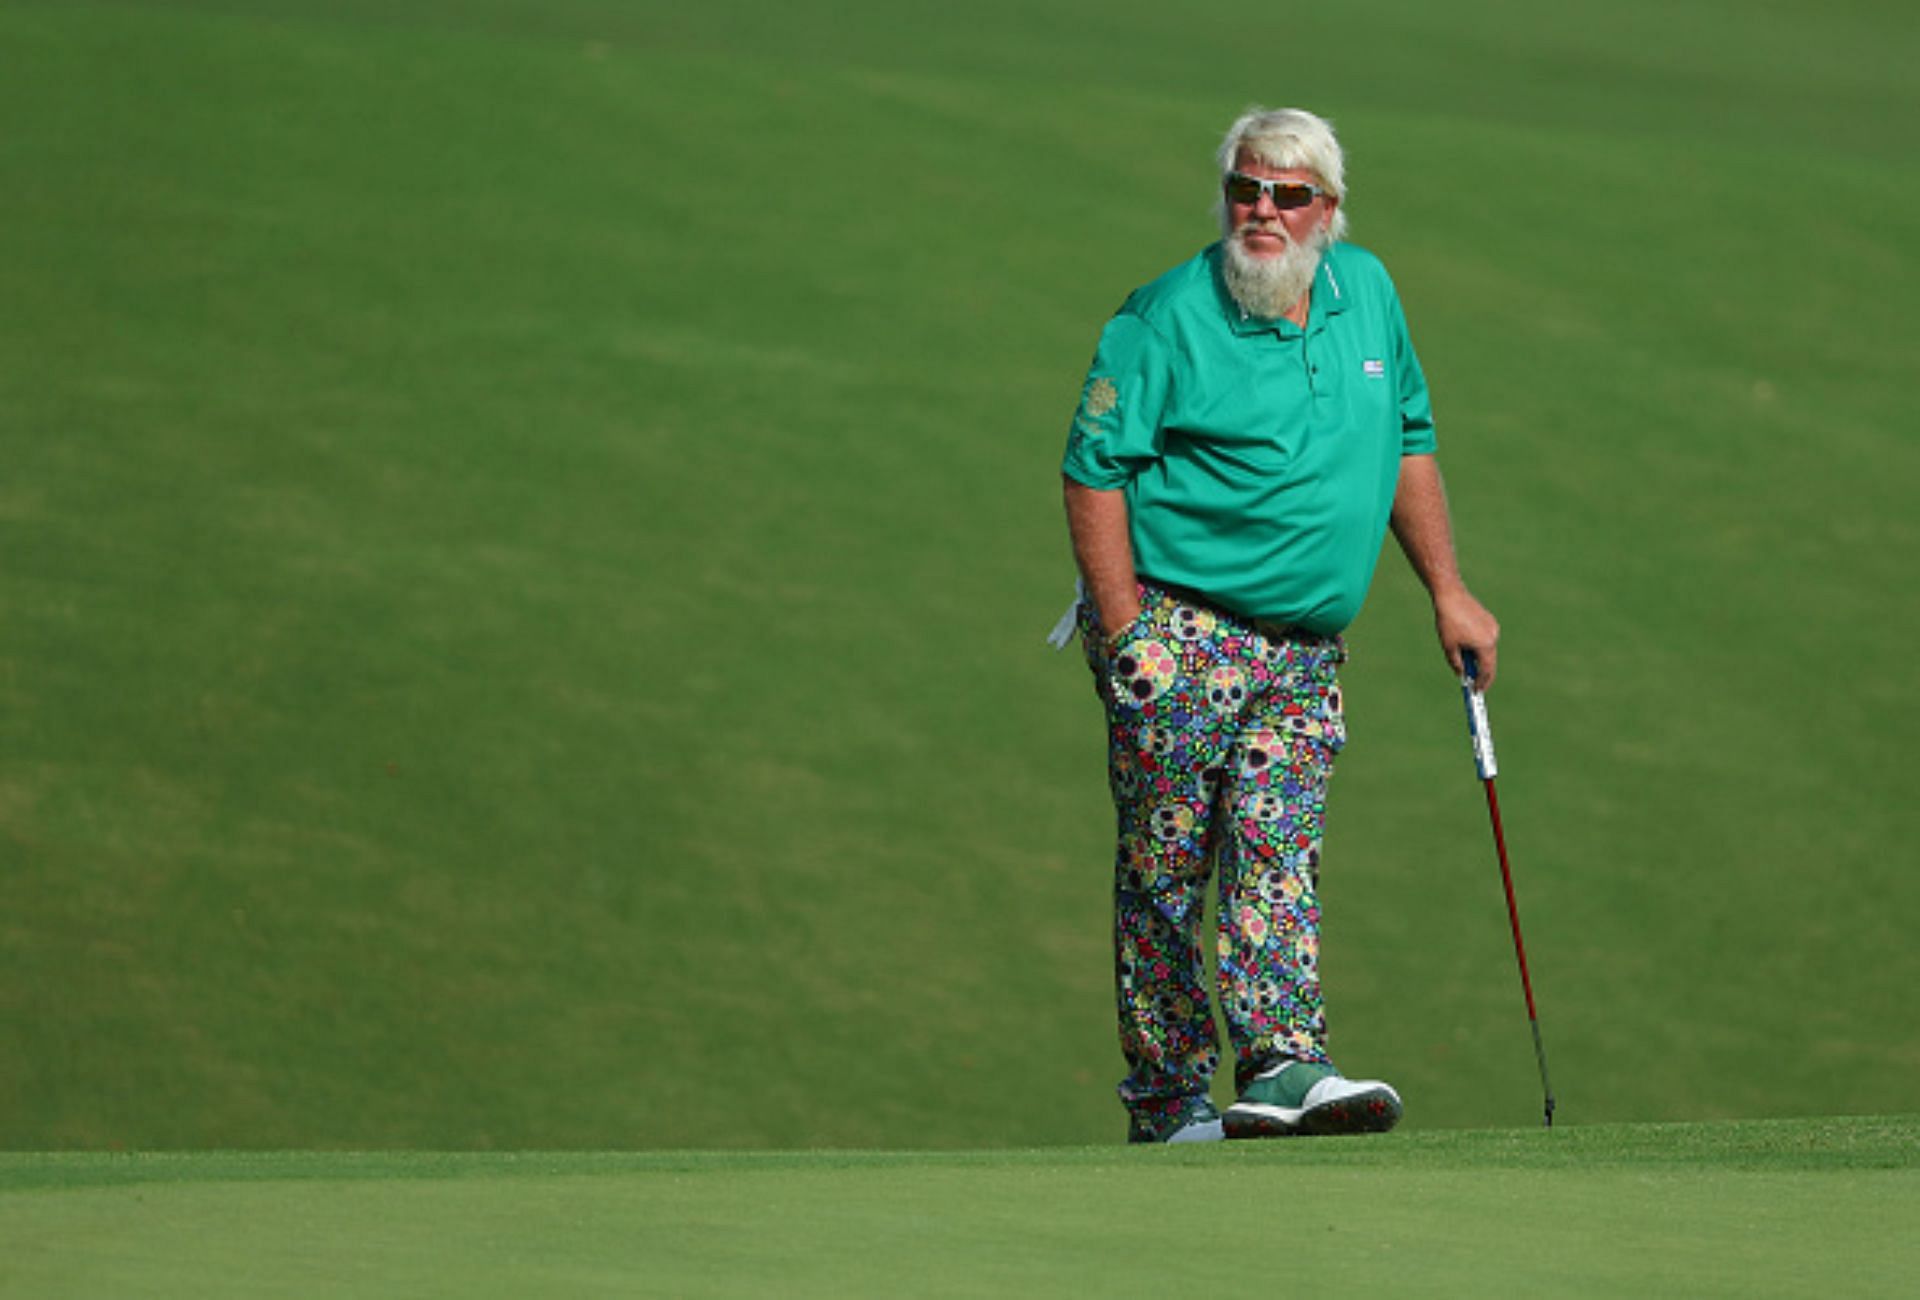 American golfer John Daly (Image via Getty).